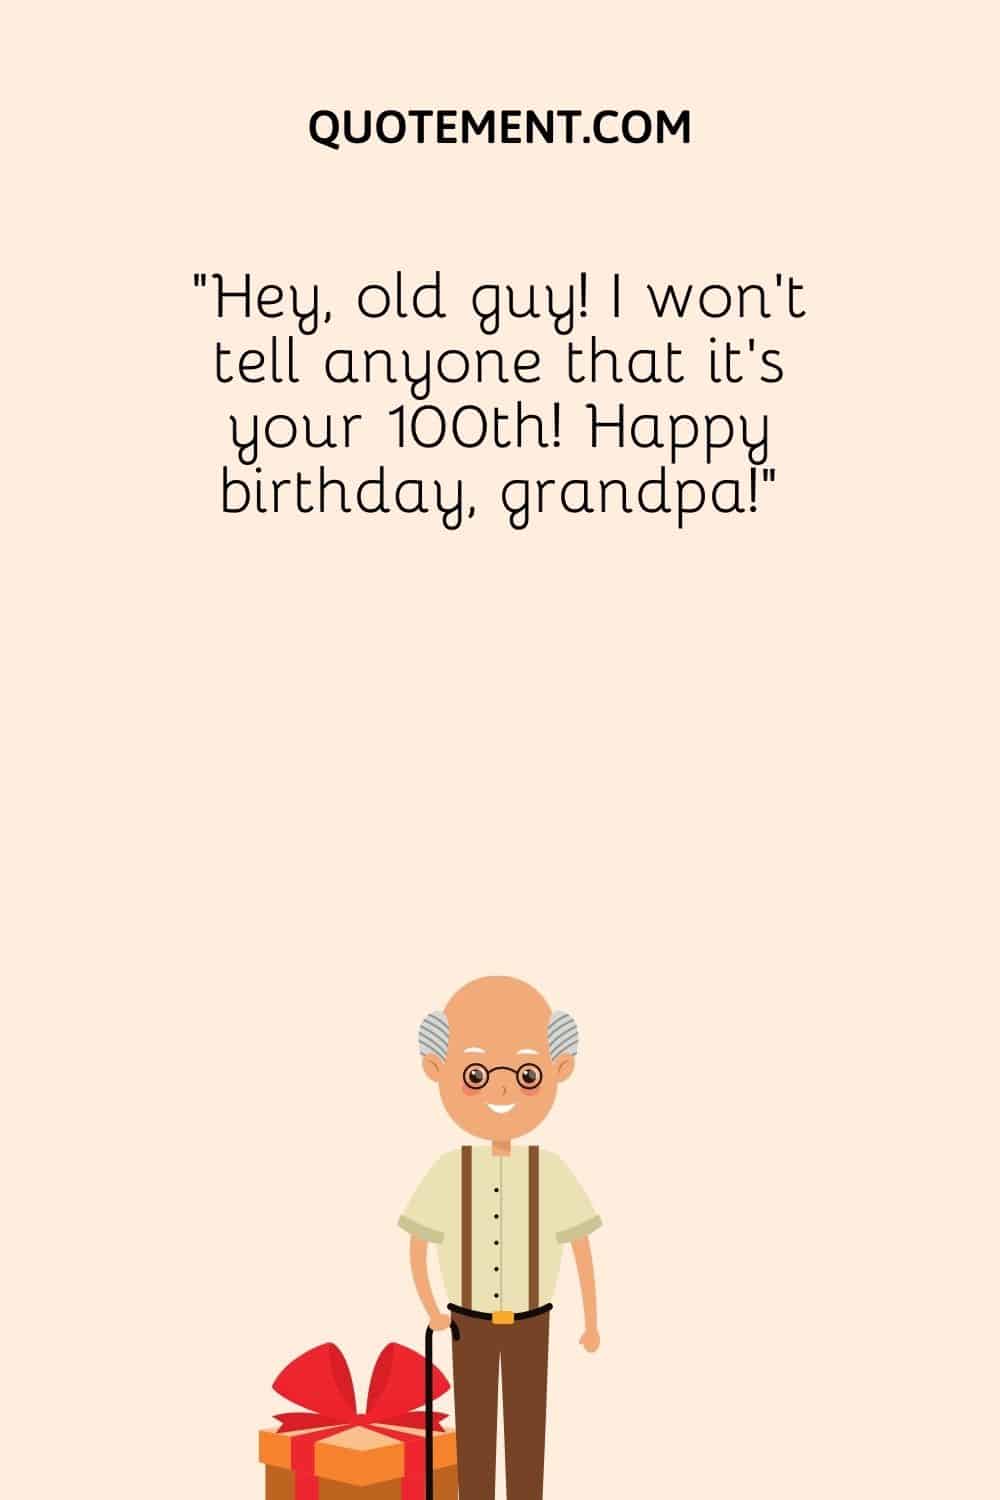 Hey, old guy